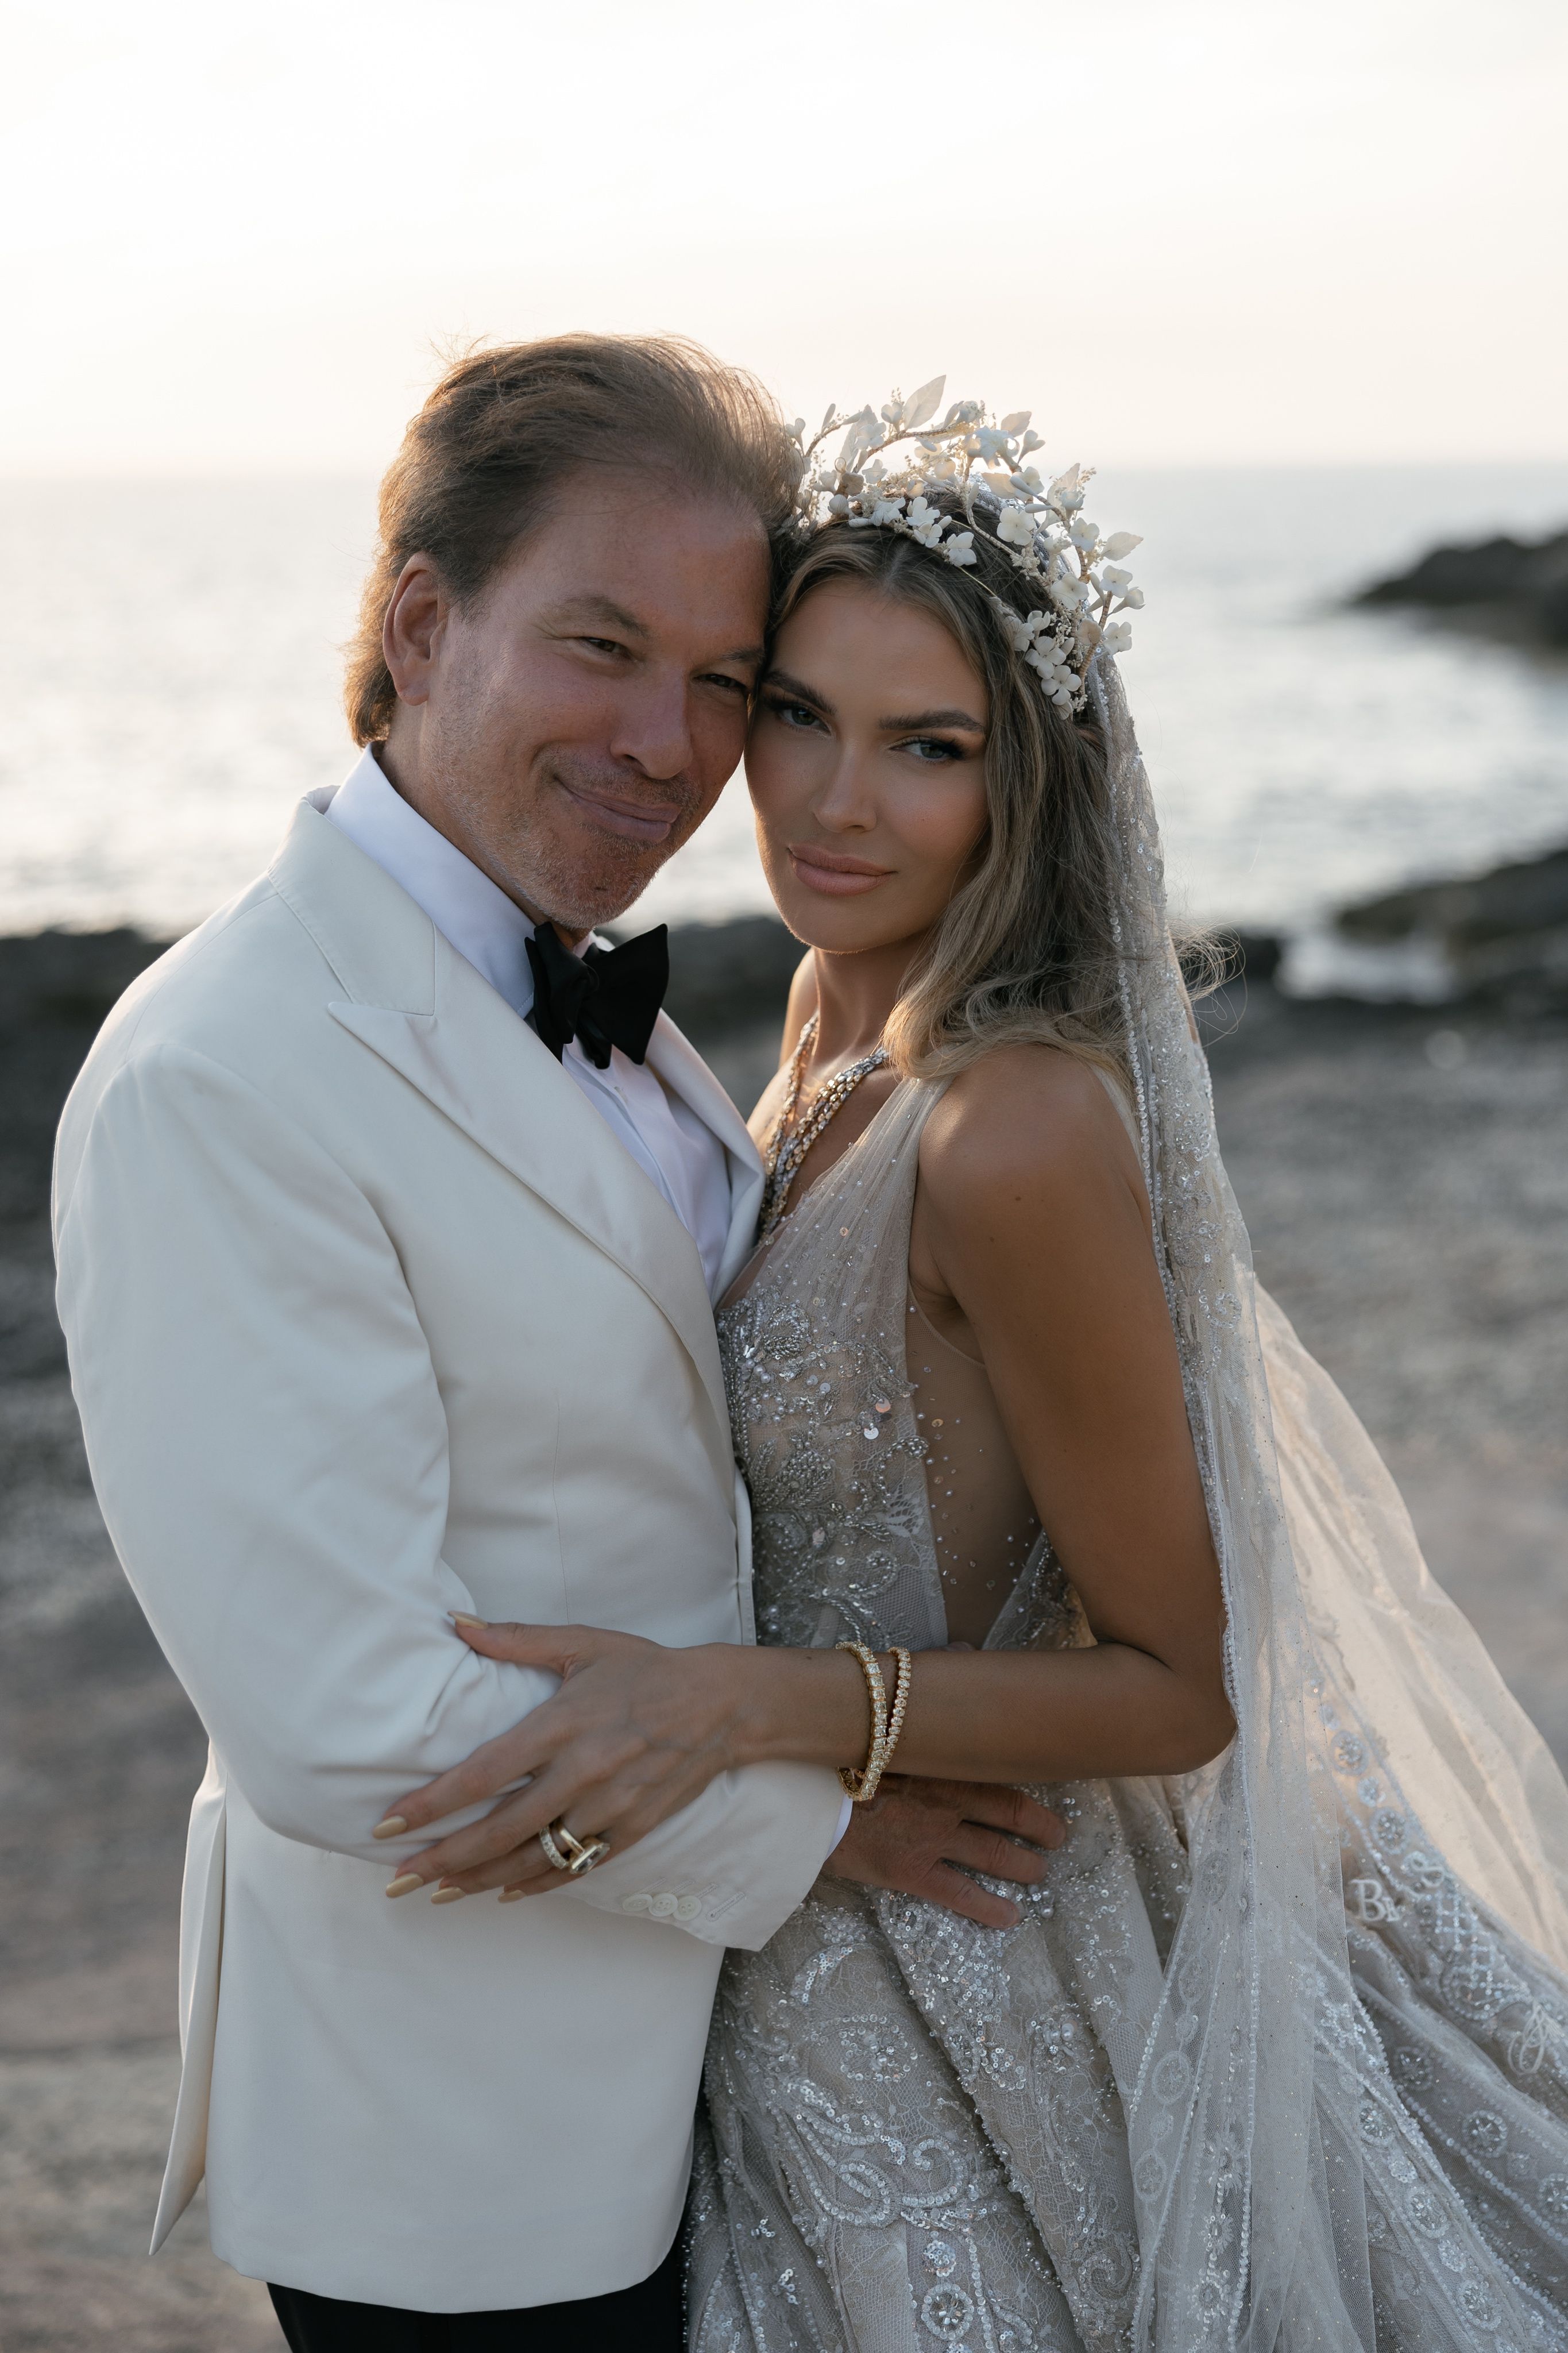 Bella Hunter & Gary Friedman's Shimmering Ibiza Wedding in Photos